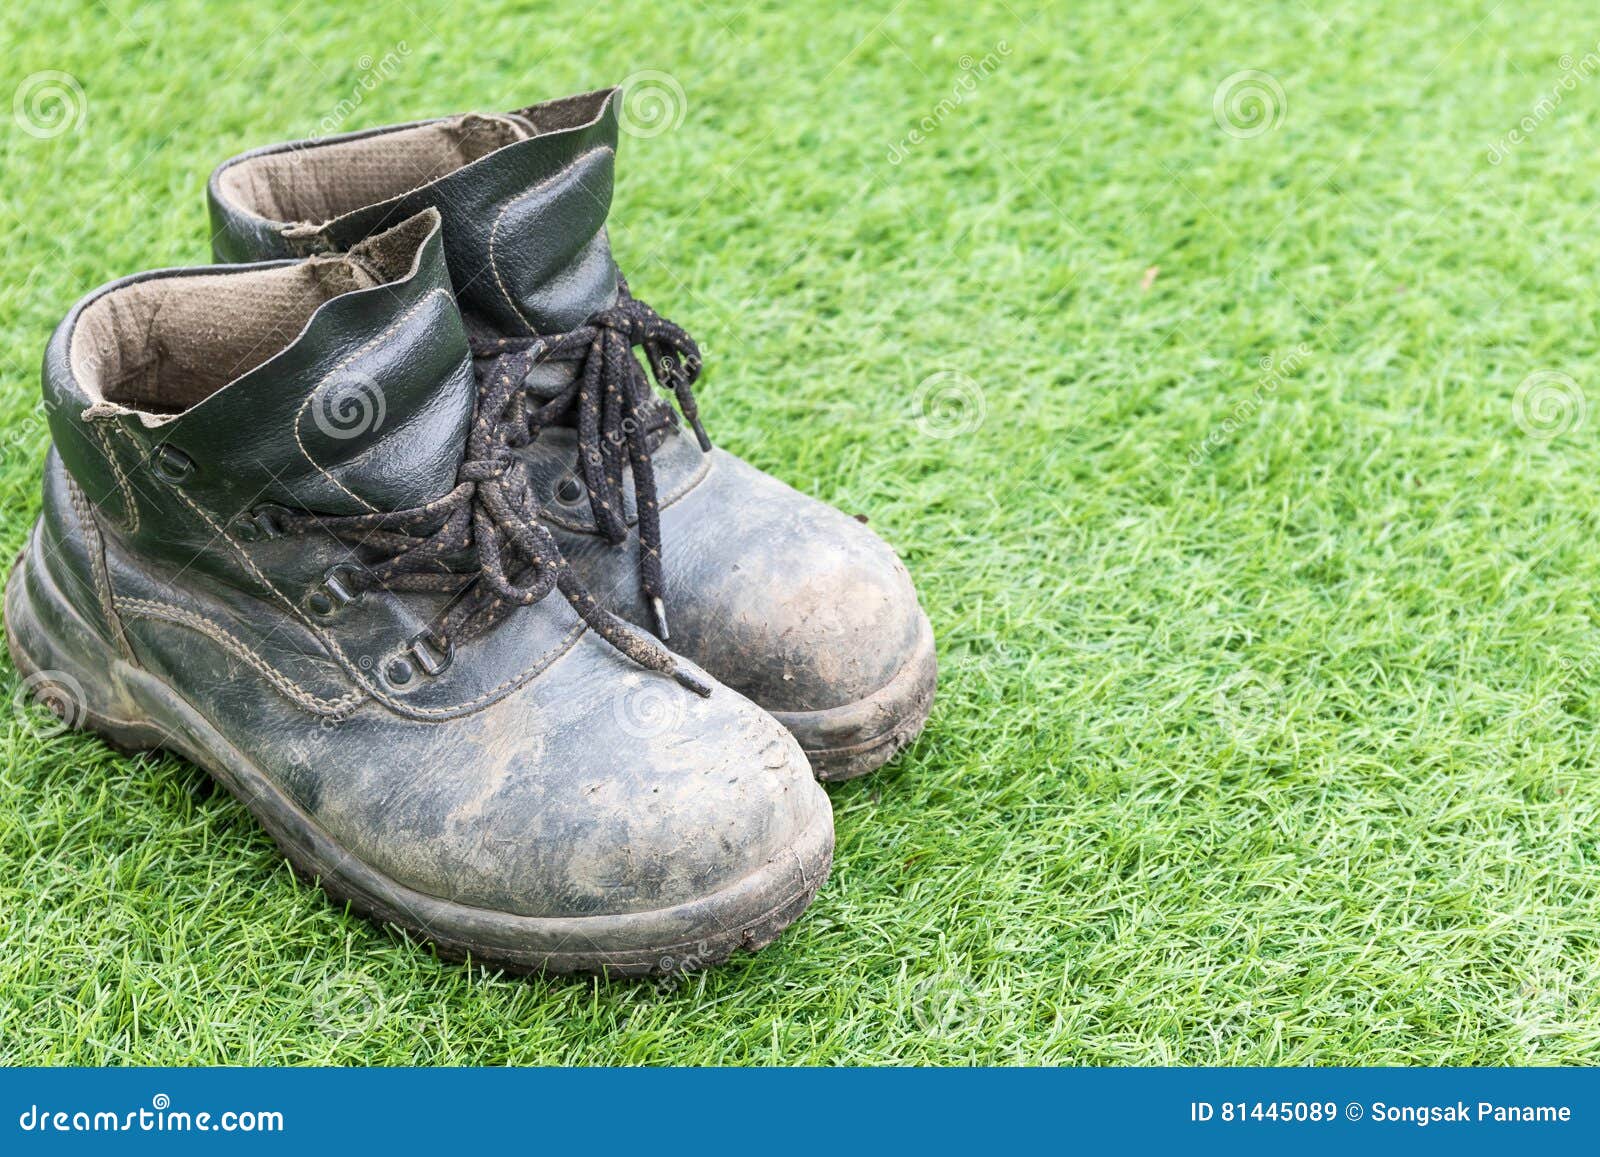 Safety leather man shoe stock image. Image of shoe, green - 81445089